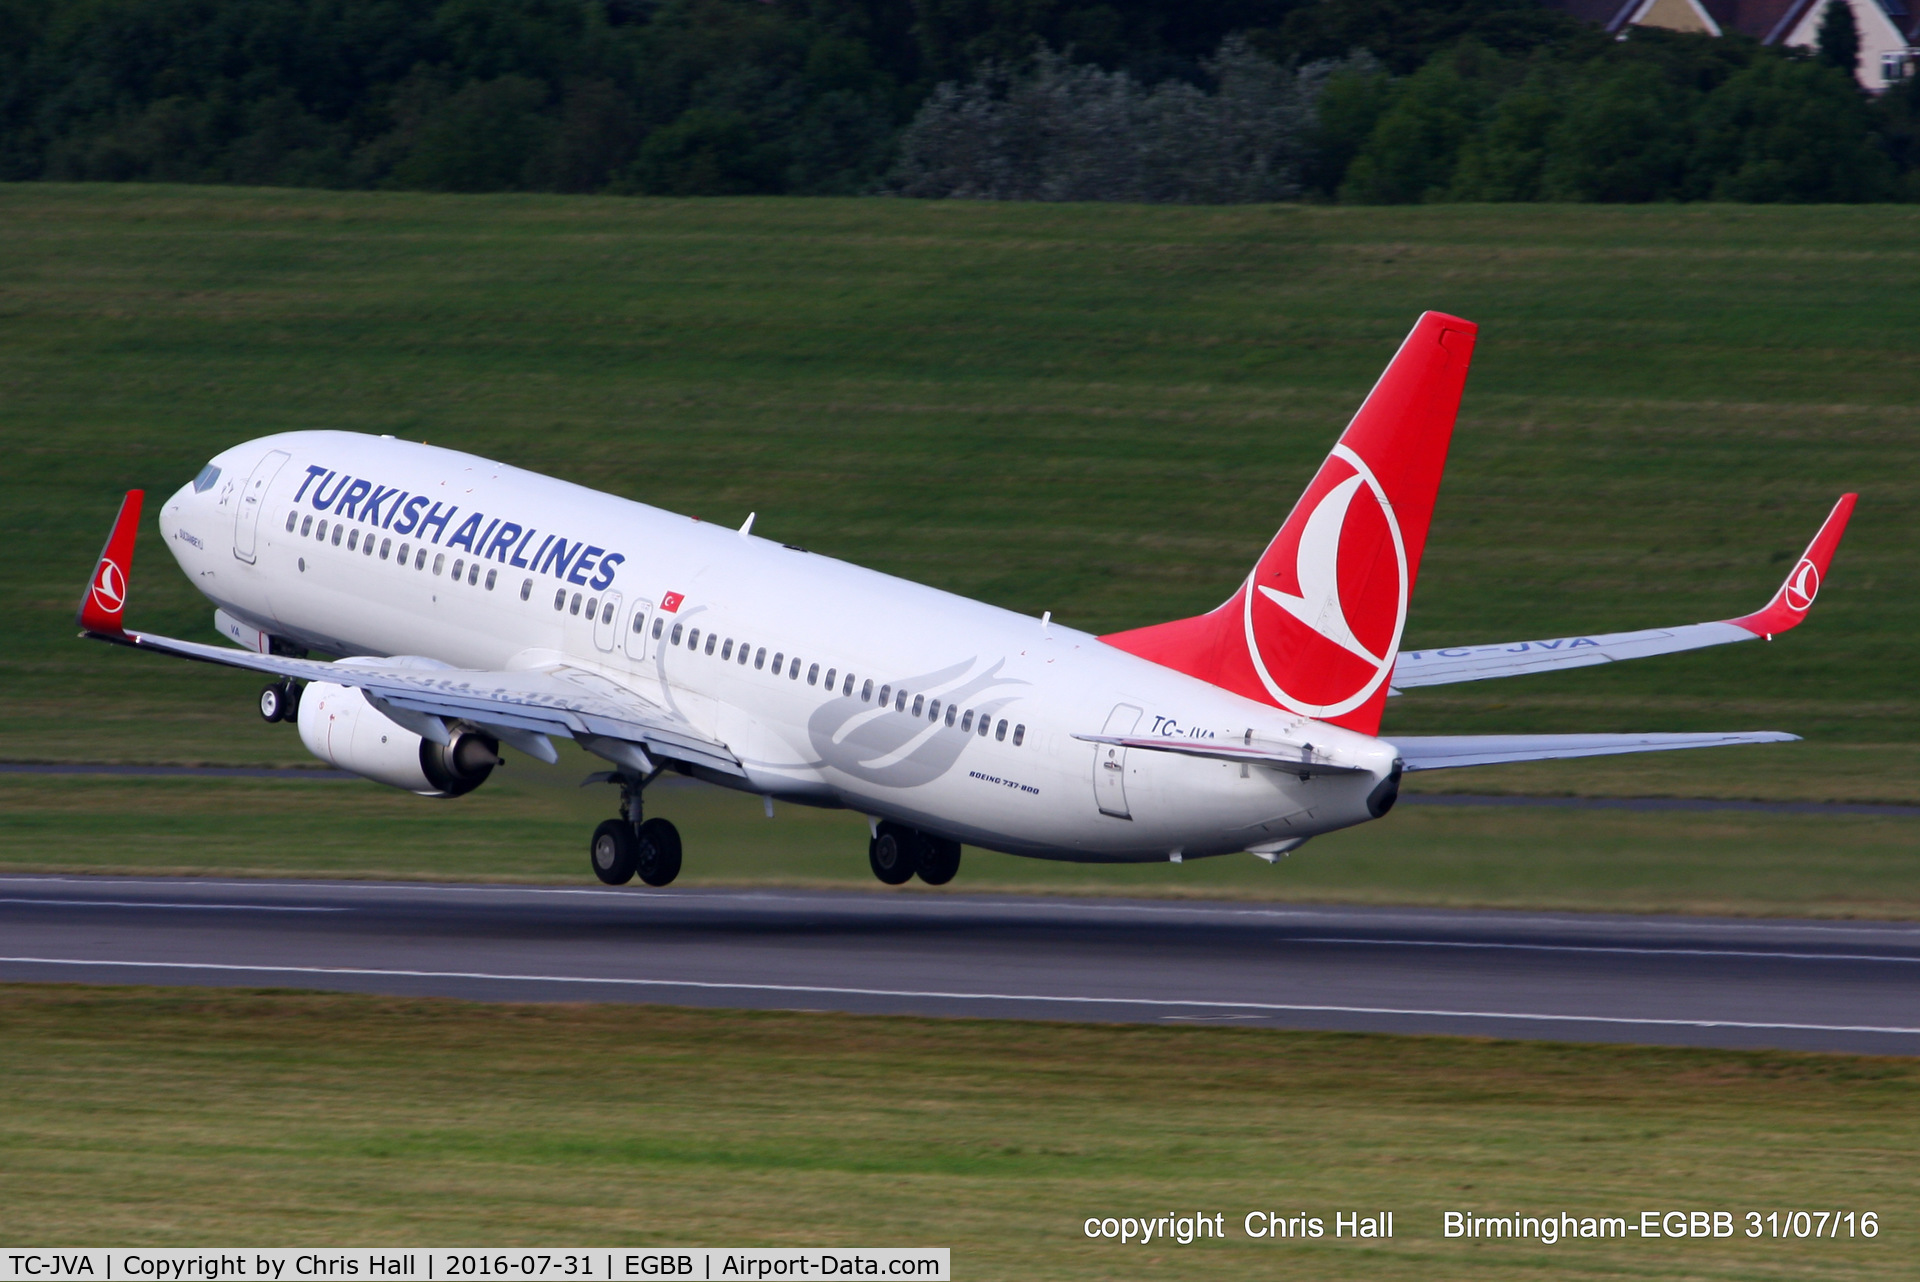 TC-JVA, 2014 Boeing 737-8F2 C/N 40988, Turkish Airlines